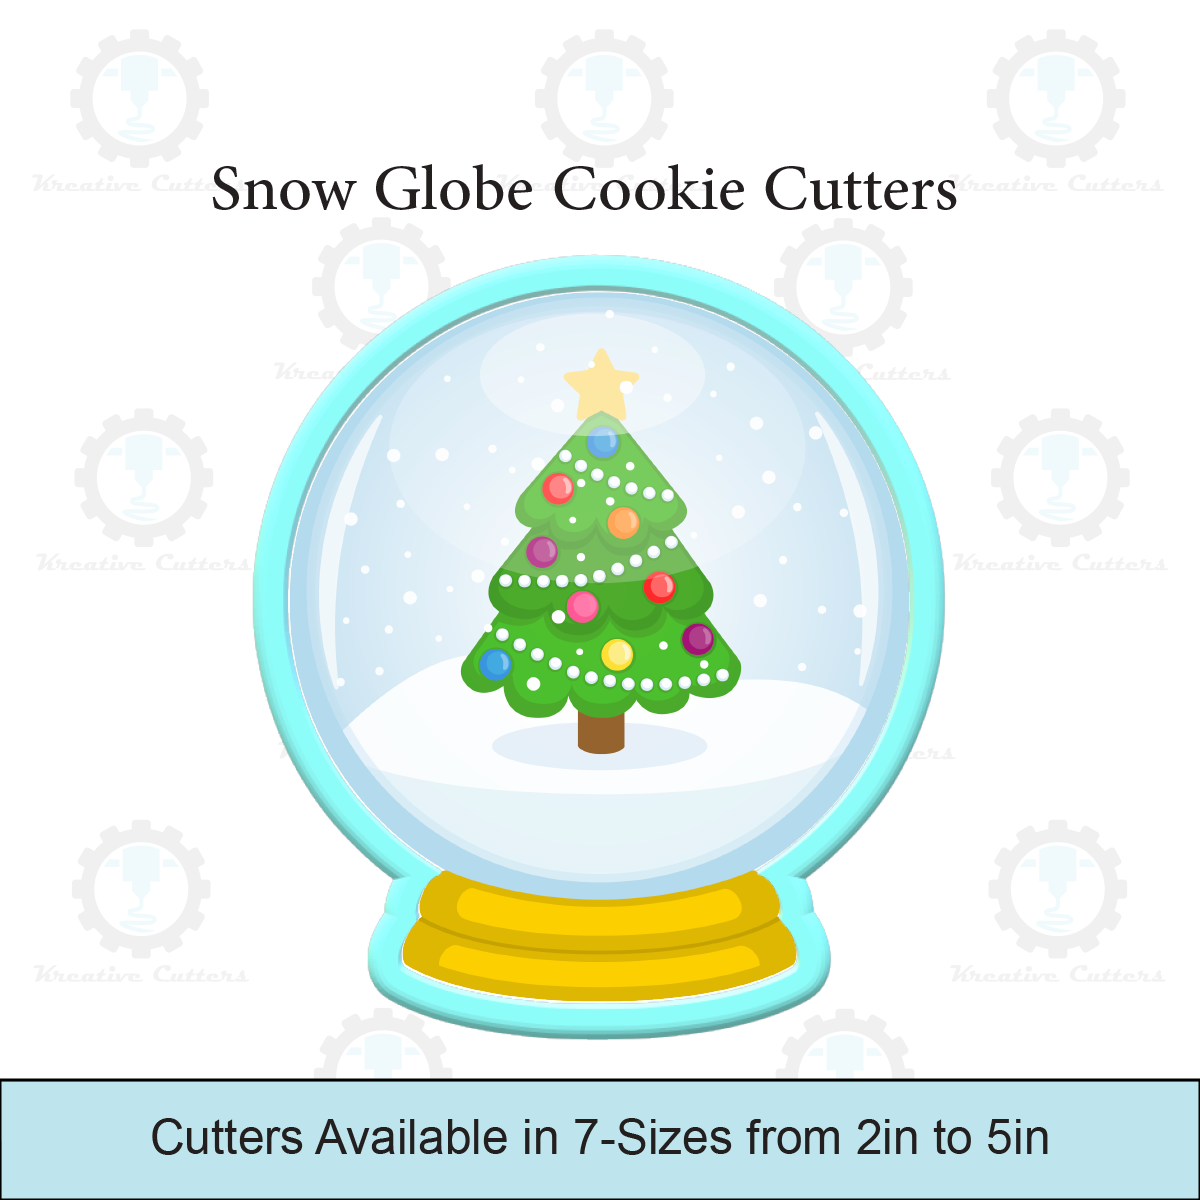 Snow Globe Cookie Cutters